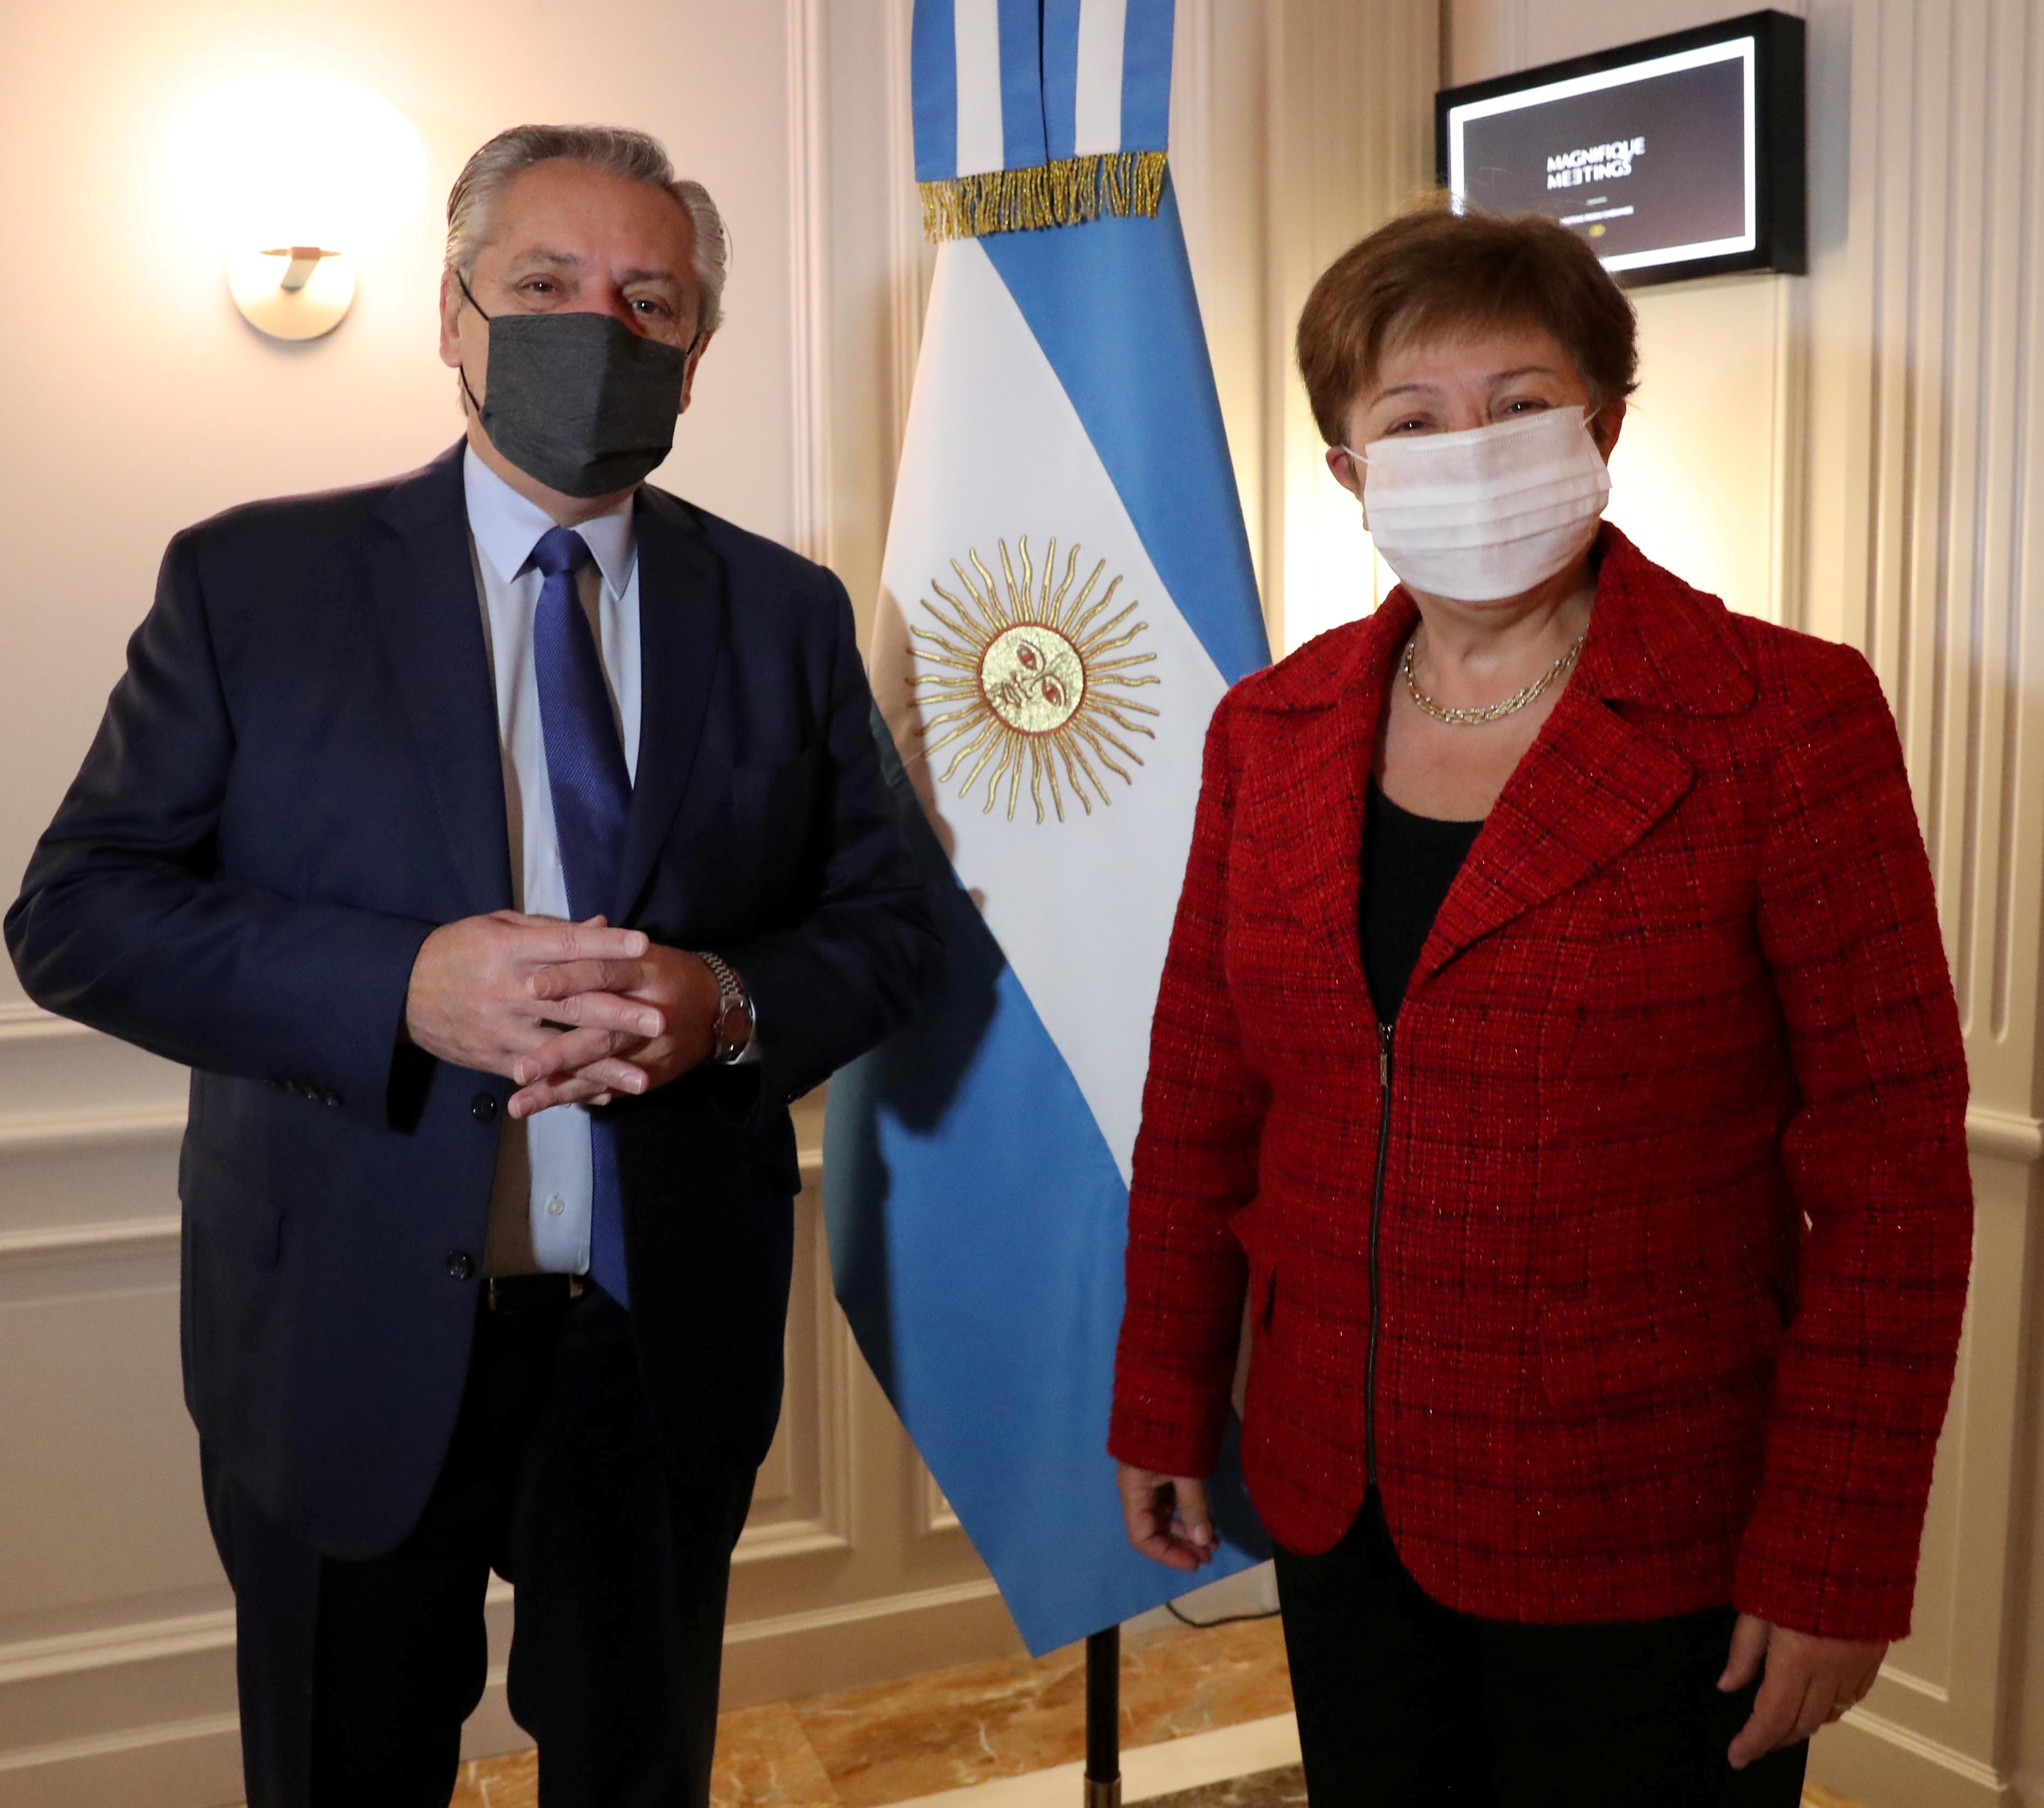 Argentina's President Alberto Fernandez poses next to International Monetary Fund (IMF) Managing Director Kristalina Georgieva, at the Sofitel hotel in Rome